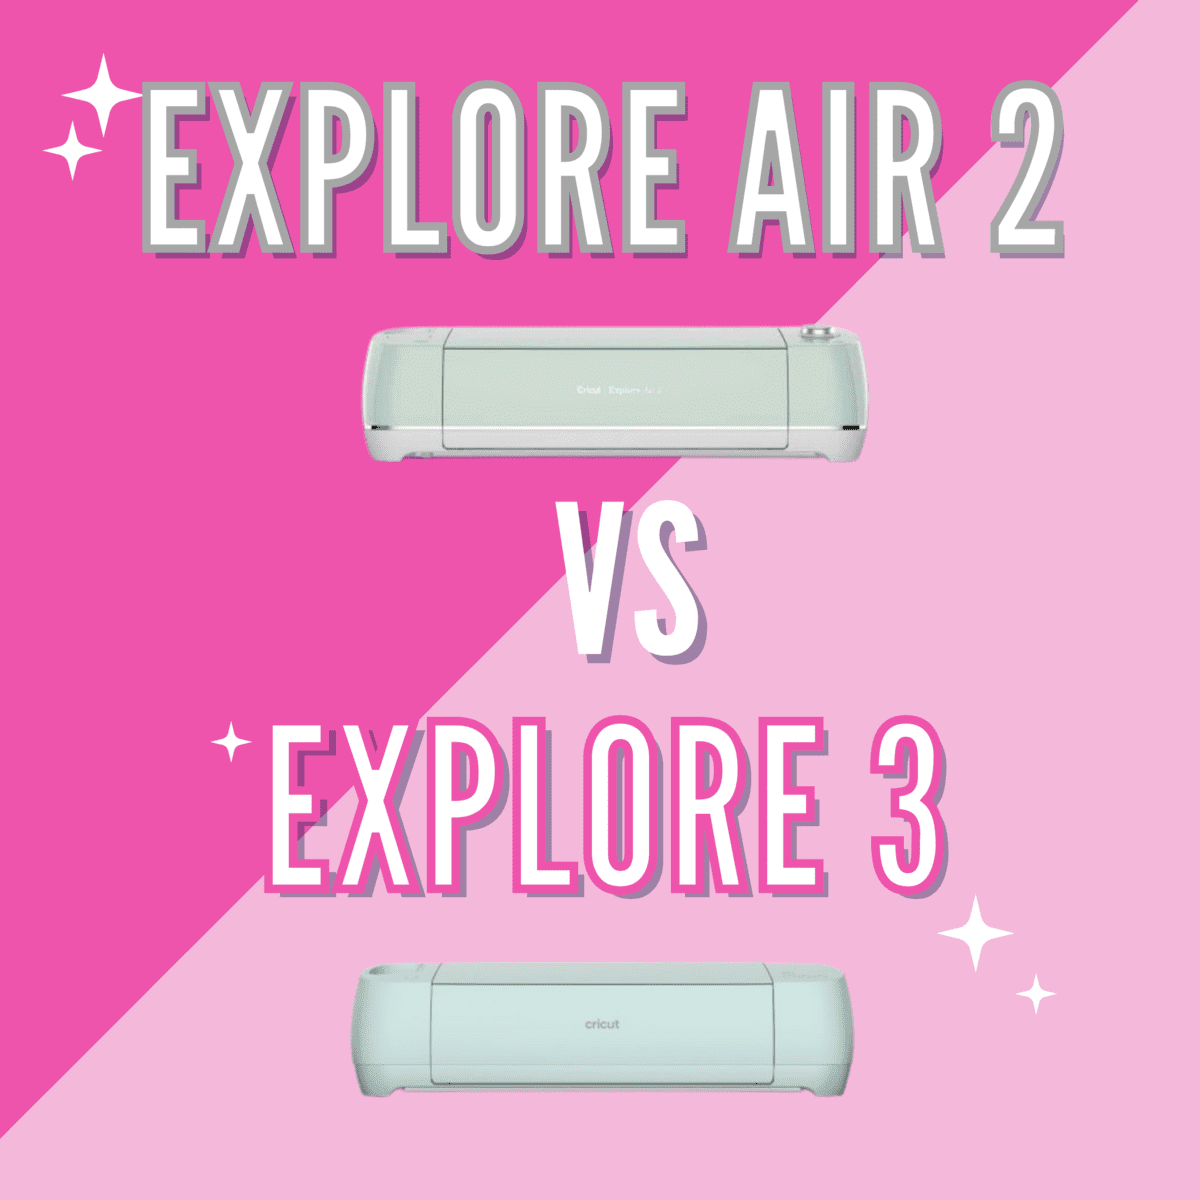 Cricut Explore Air 2 Vs Explore 3 - Which One Should I Choose